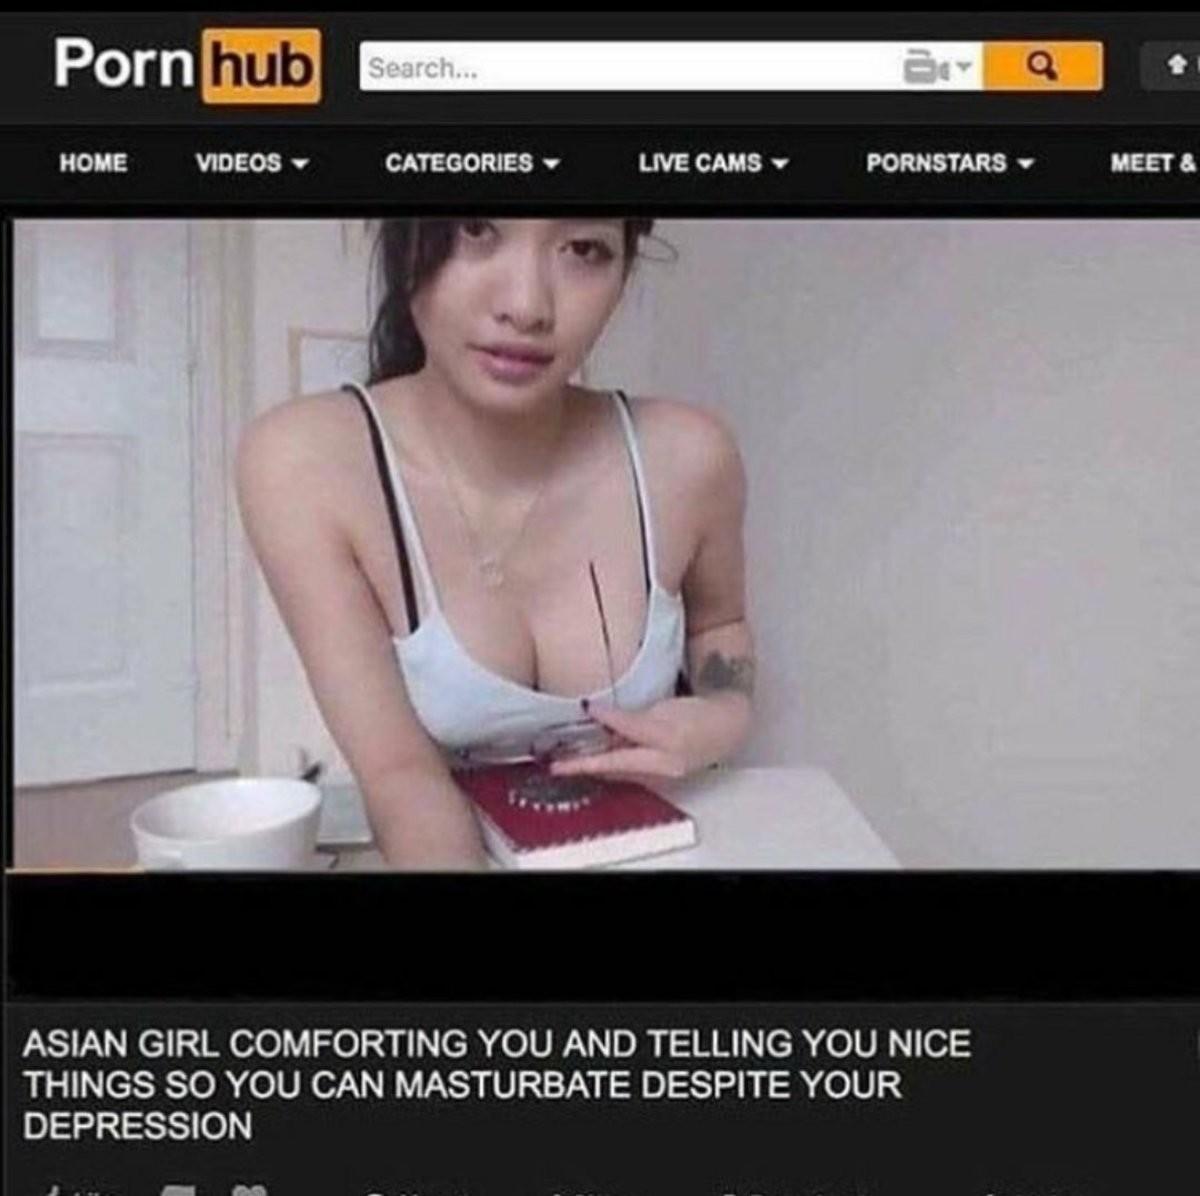 She tells you to masturbate